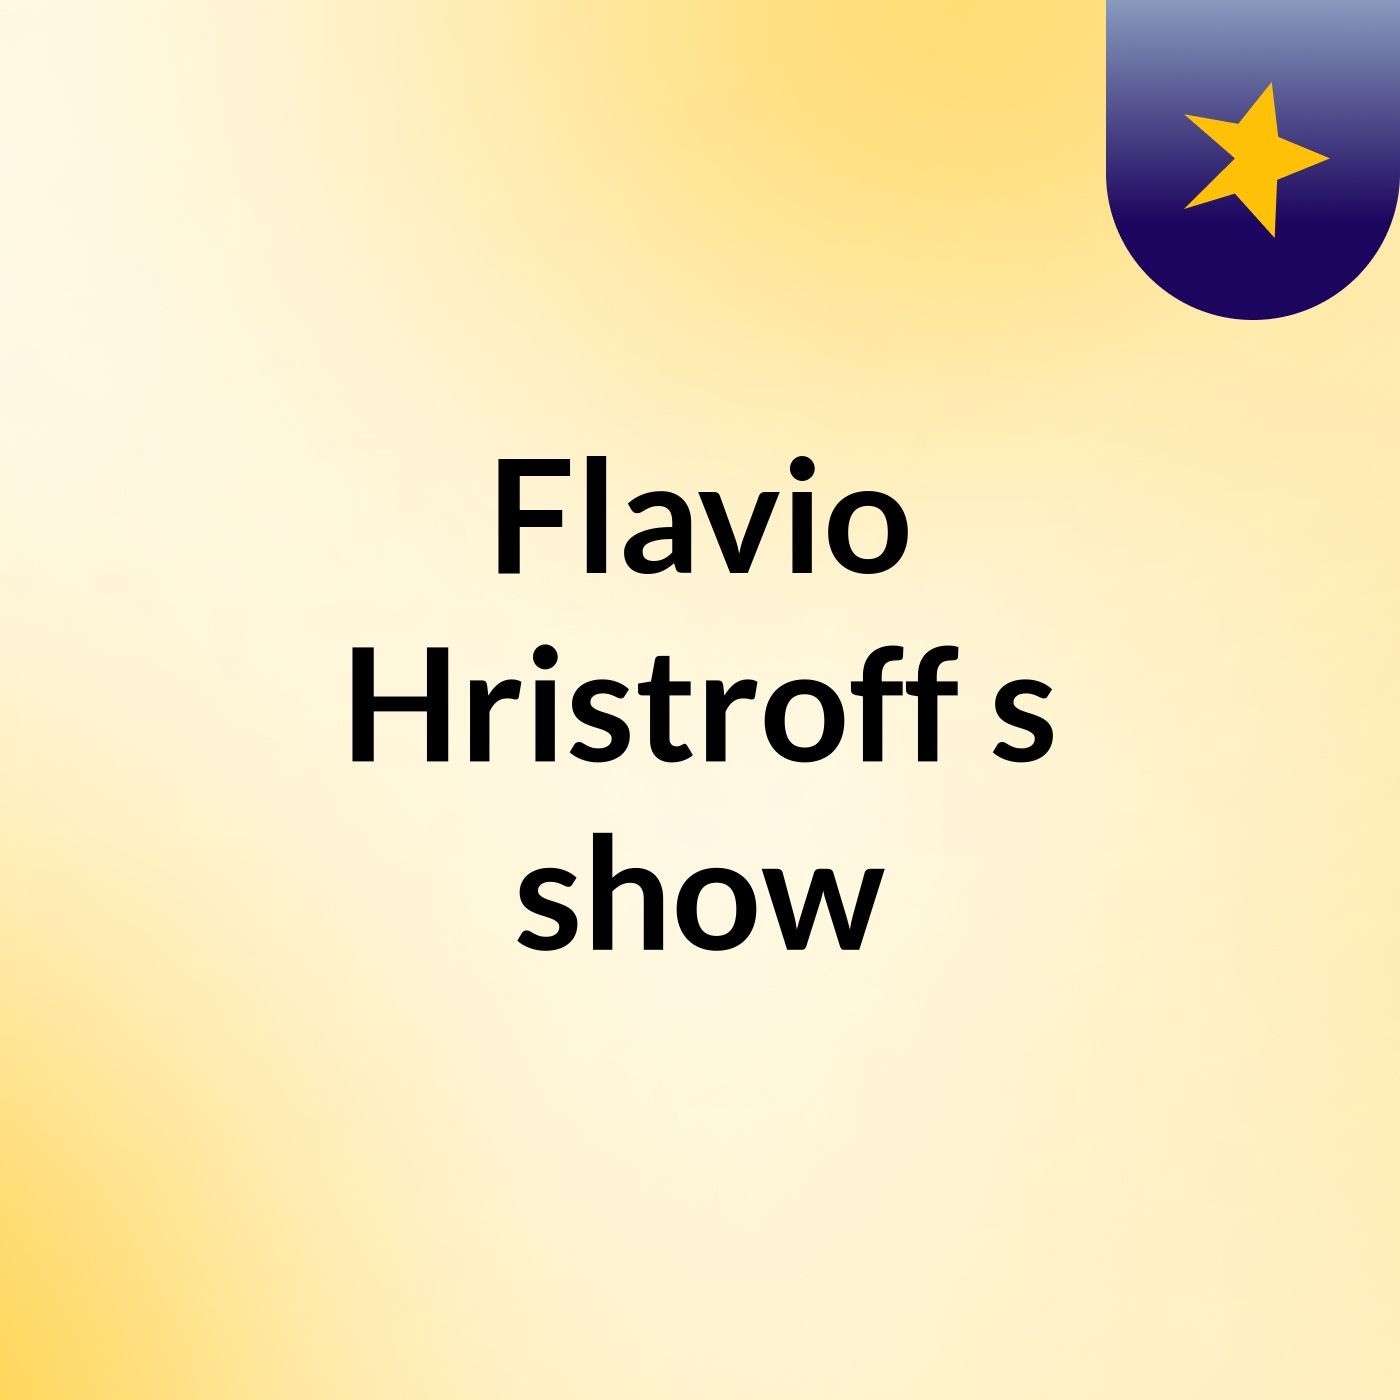 Flavio Hristroff's show